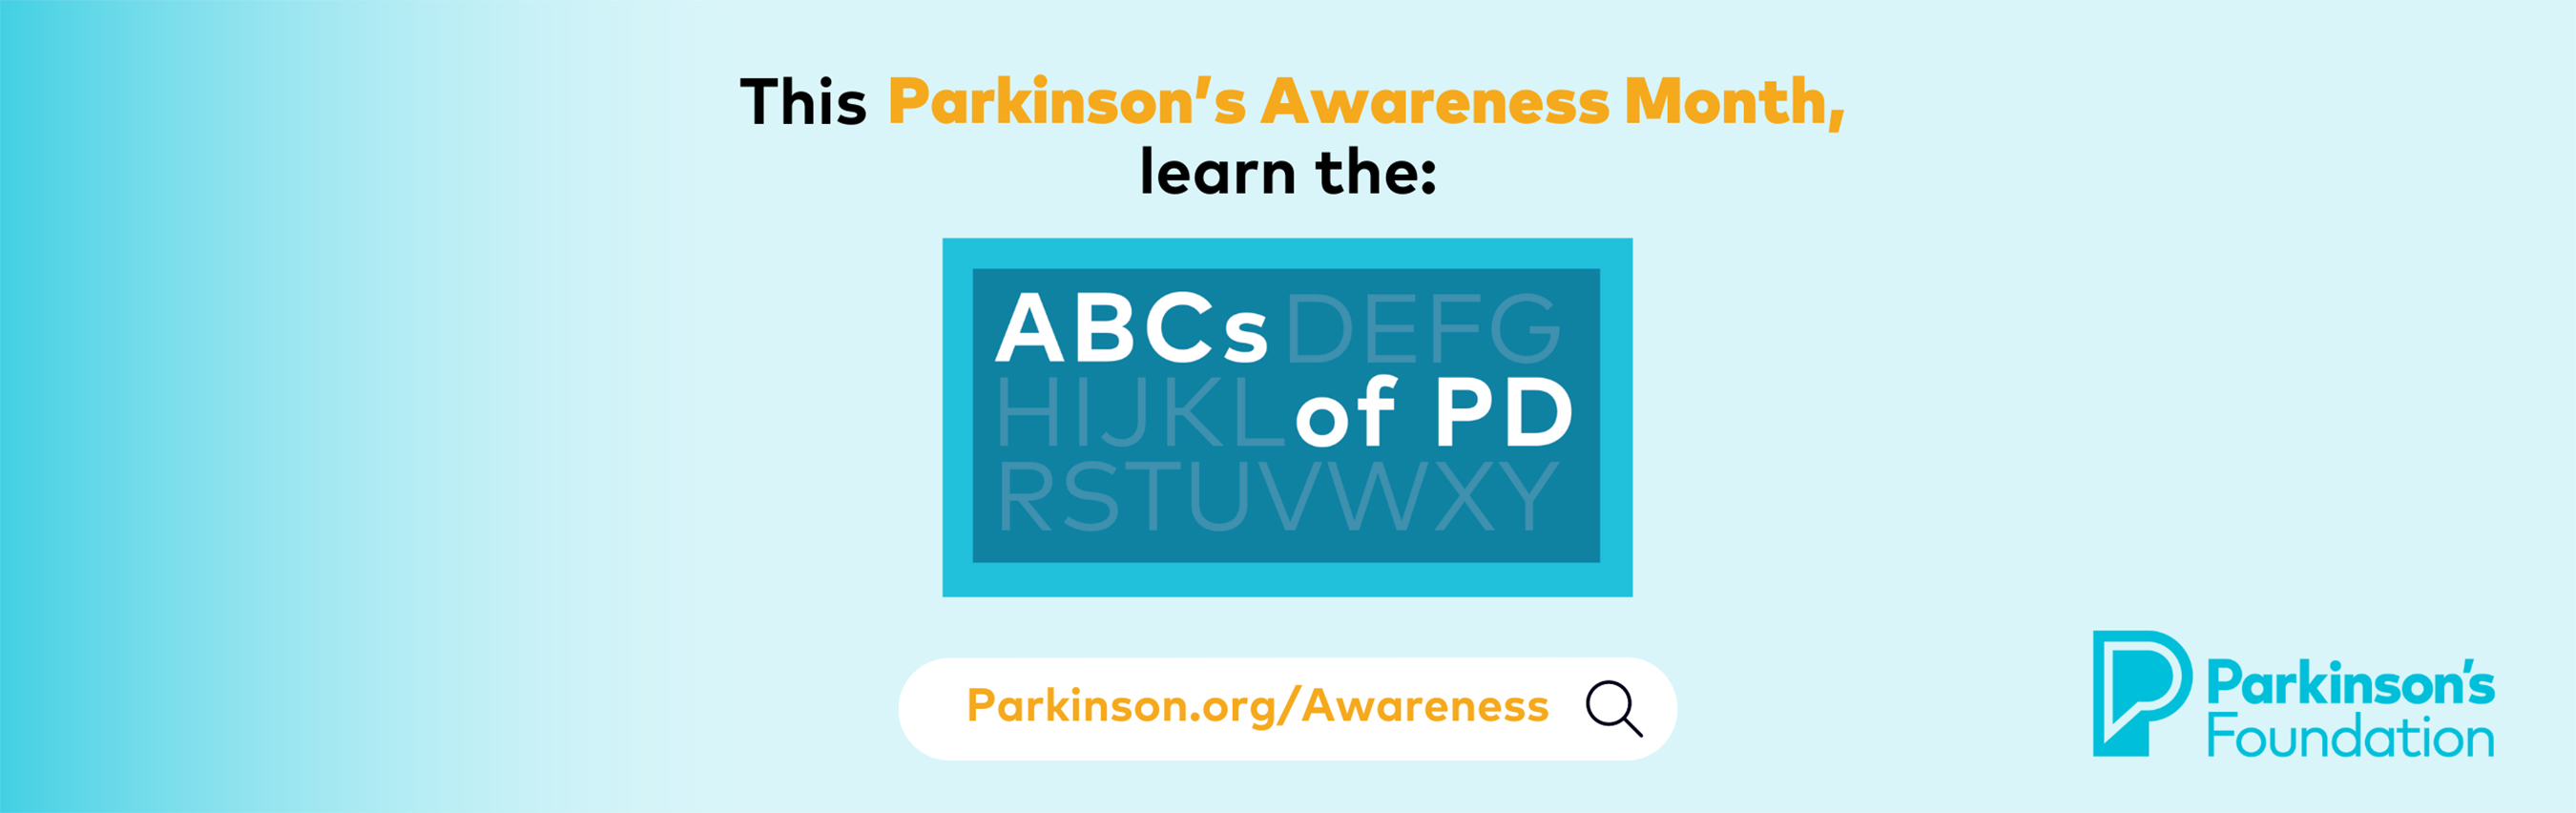 Parkinson's Foundation Launches #ABCsOfPD Campaign for Parkinson's Awareness Month